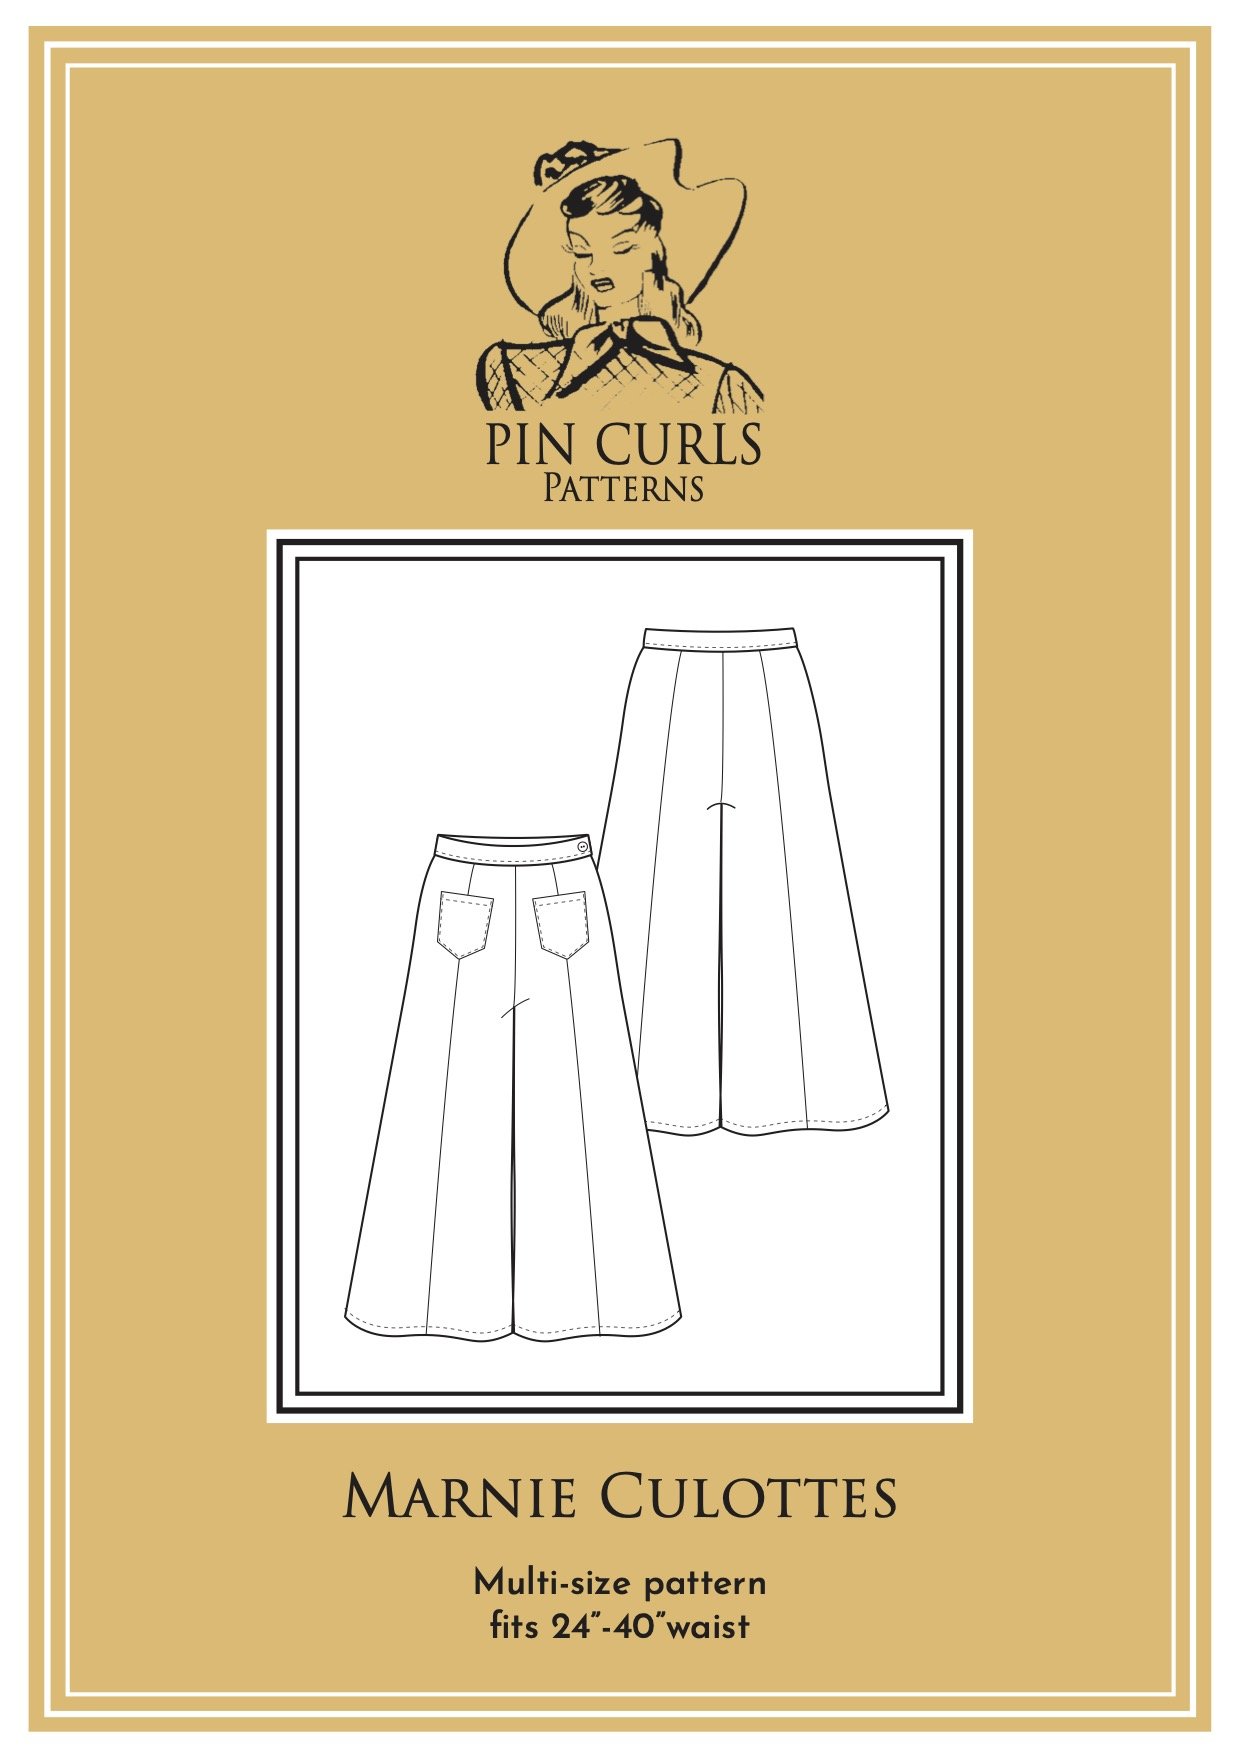 Pincurls Patterns Marnie Culottes front image.jpg